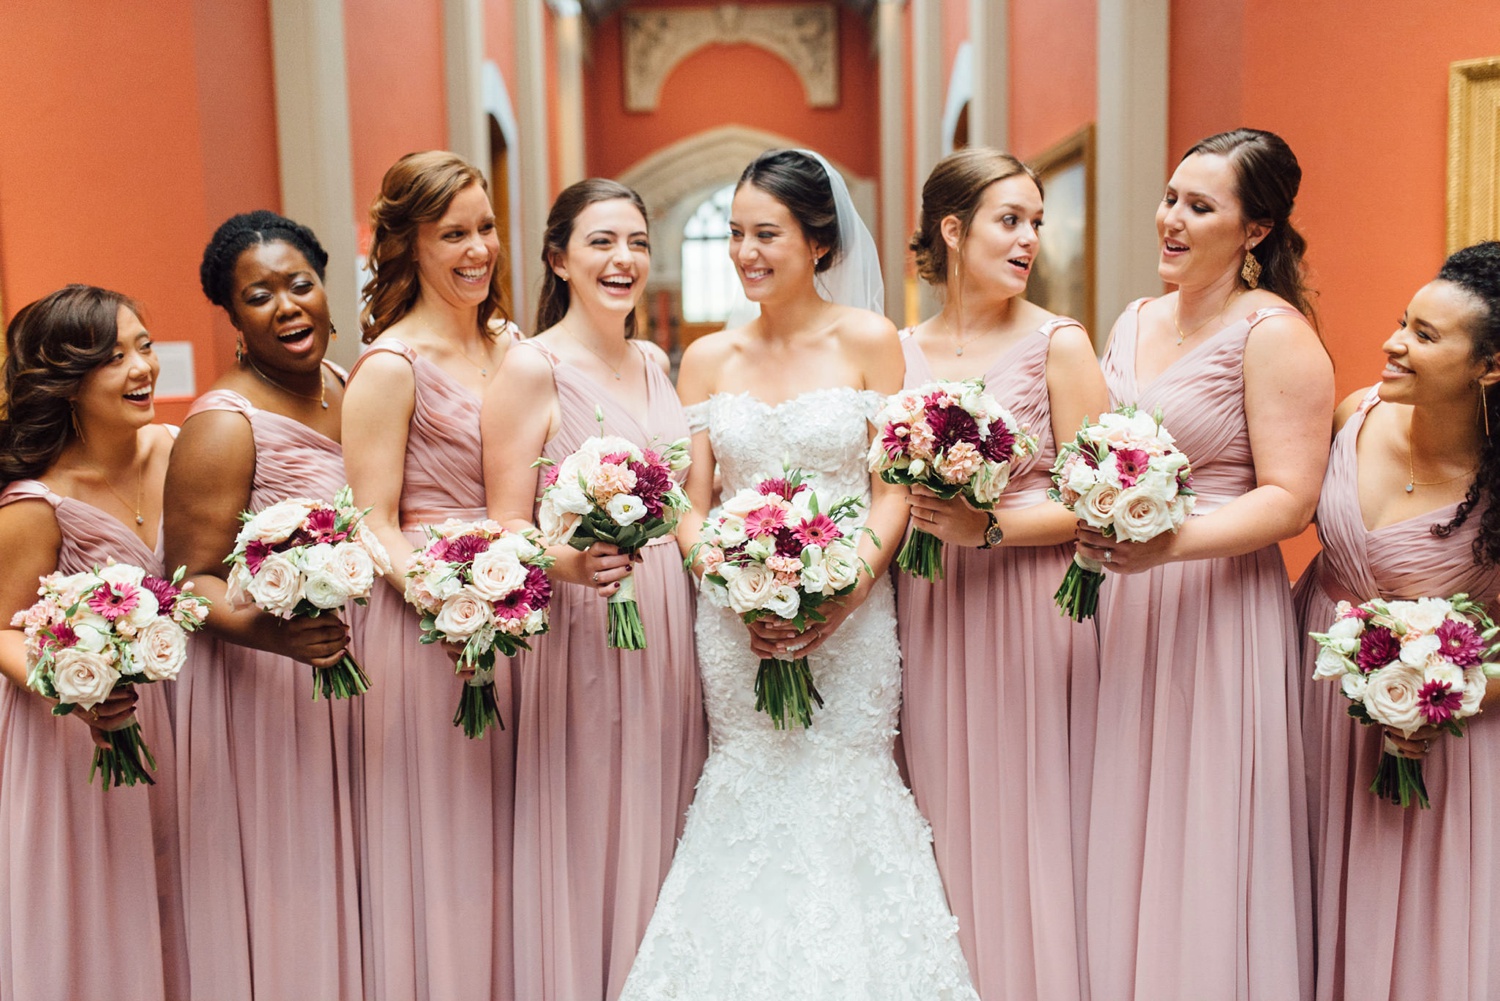 Erica + Chase - PAFA Wedding - Philadelphia Wedding Photographer - Alison Dunn Photography photo